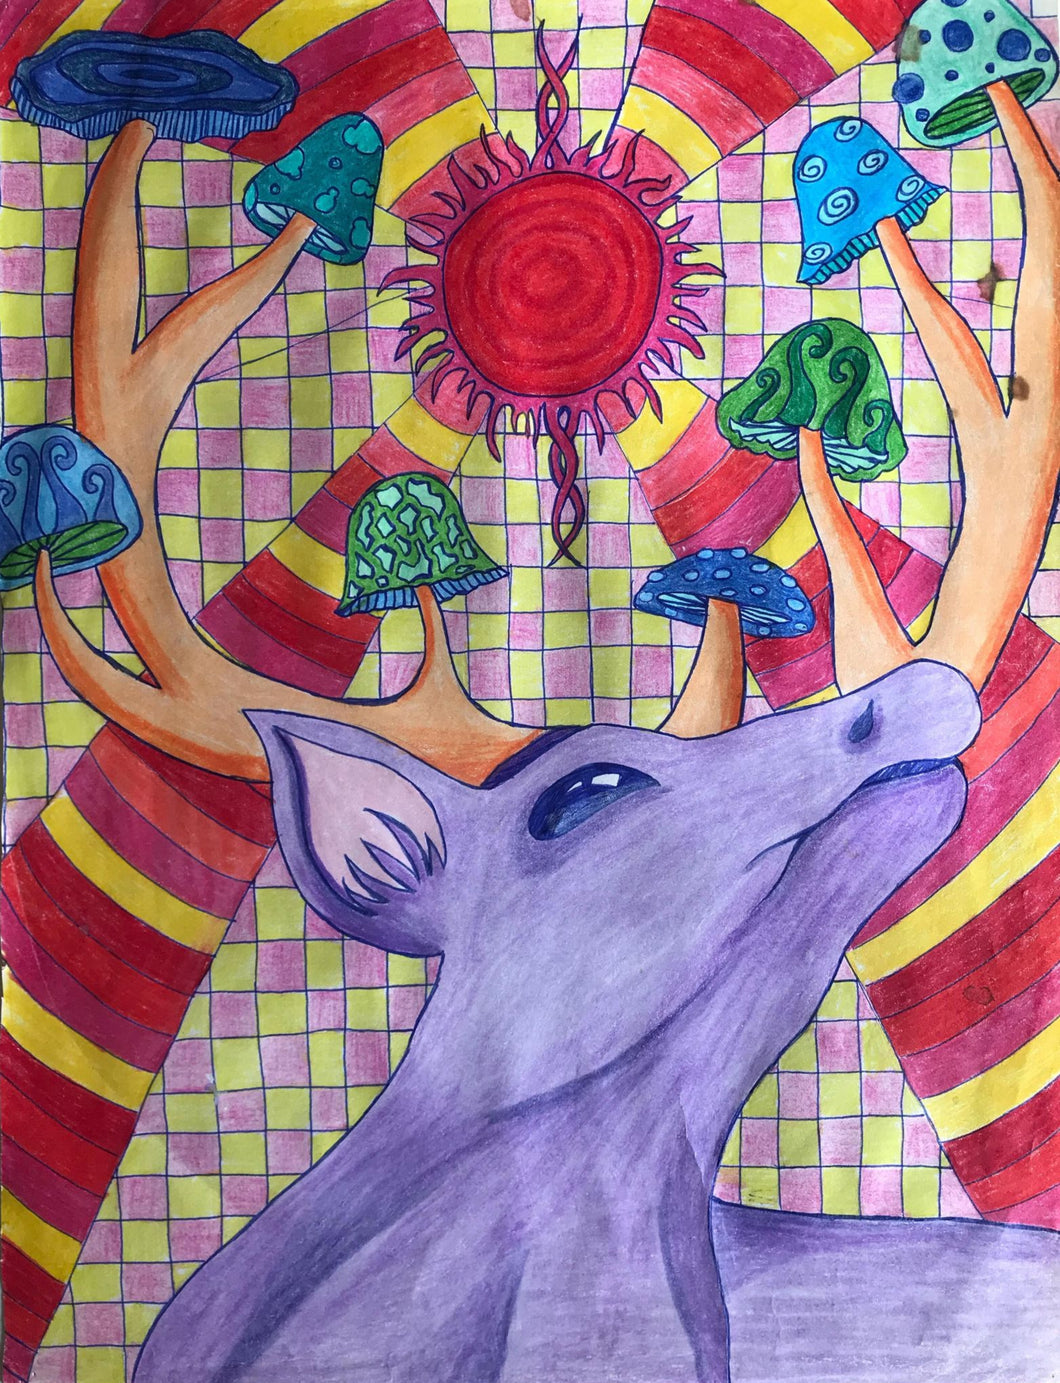 Alchemy original art psychedelic mushroom deer hallucinogenius artwork colorful surreal trippy